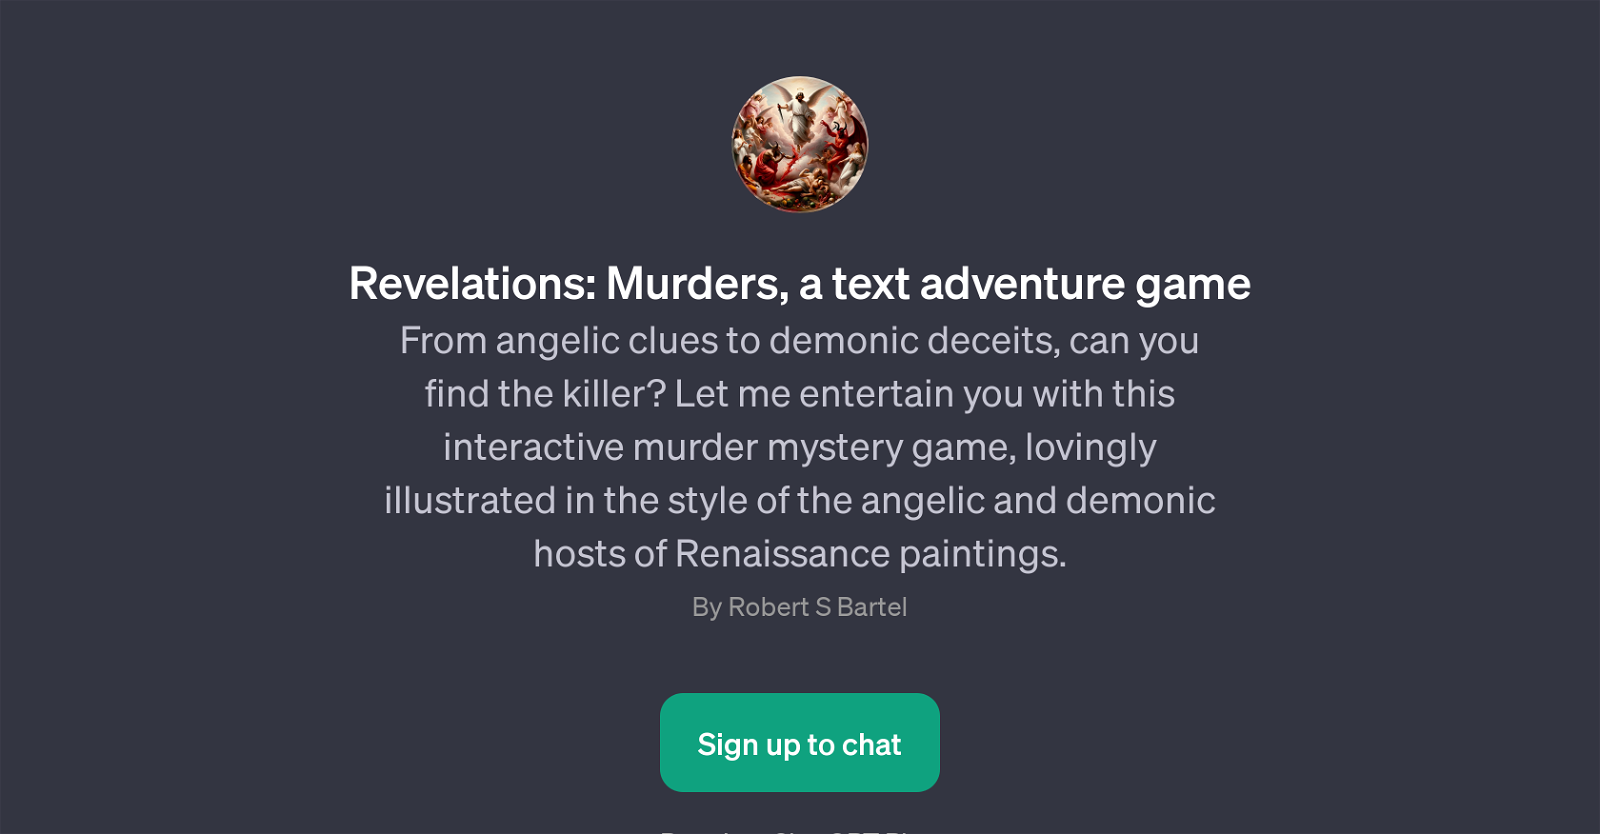 Revelations: Murders website